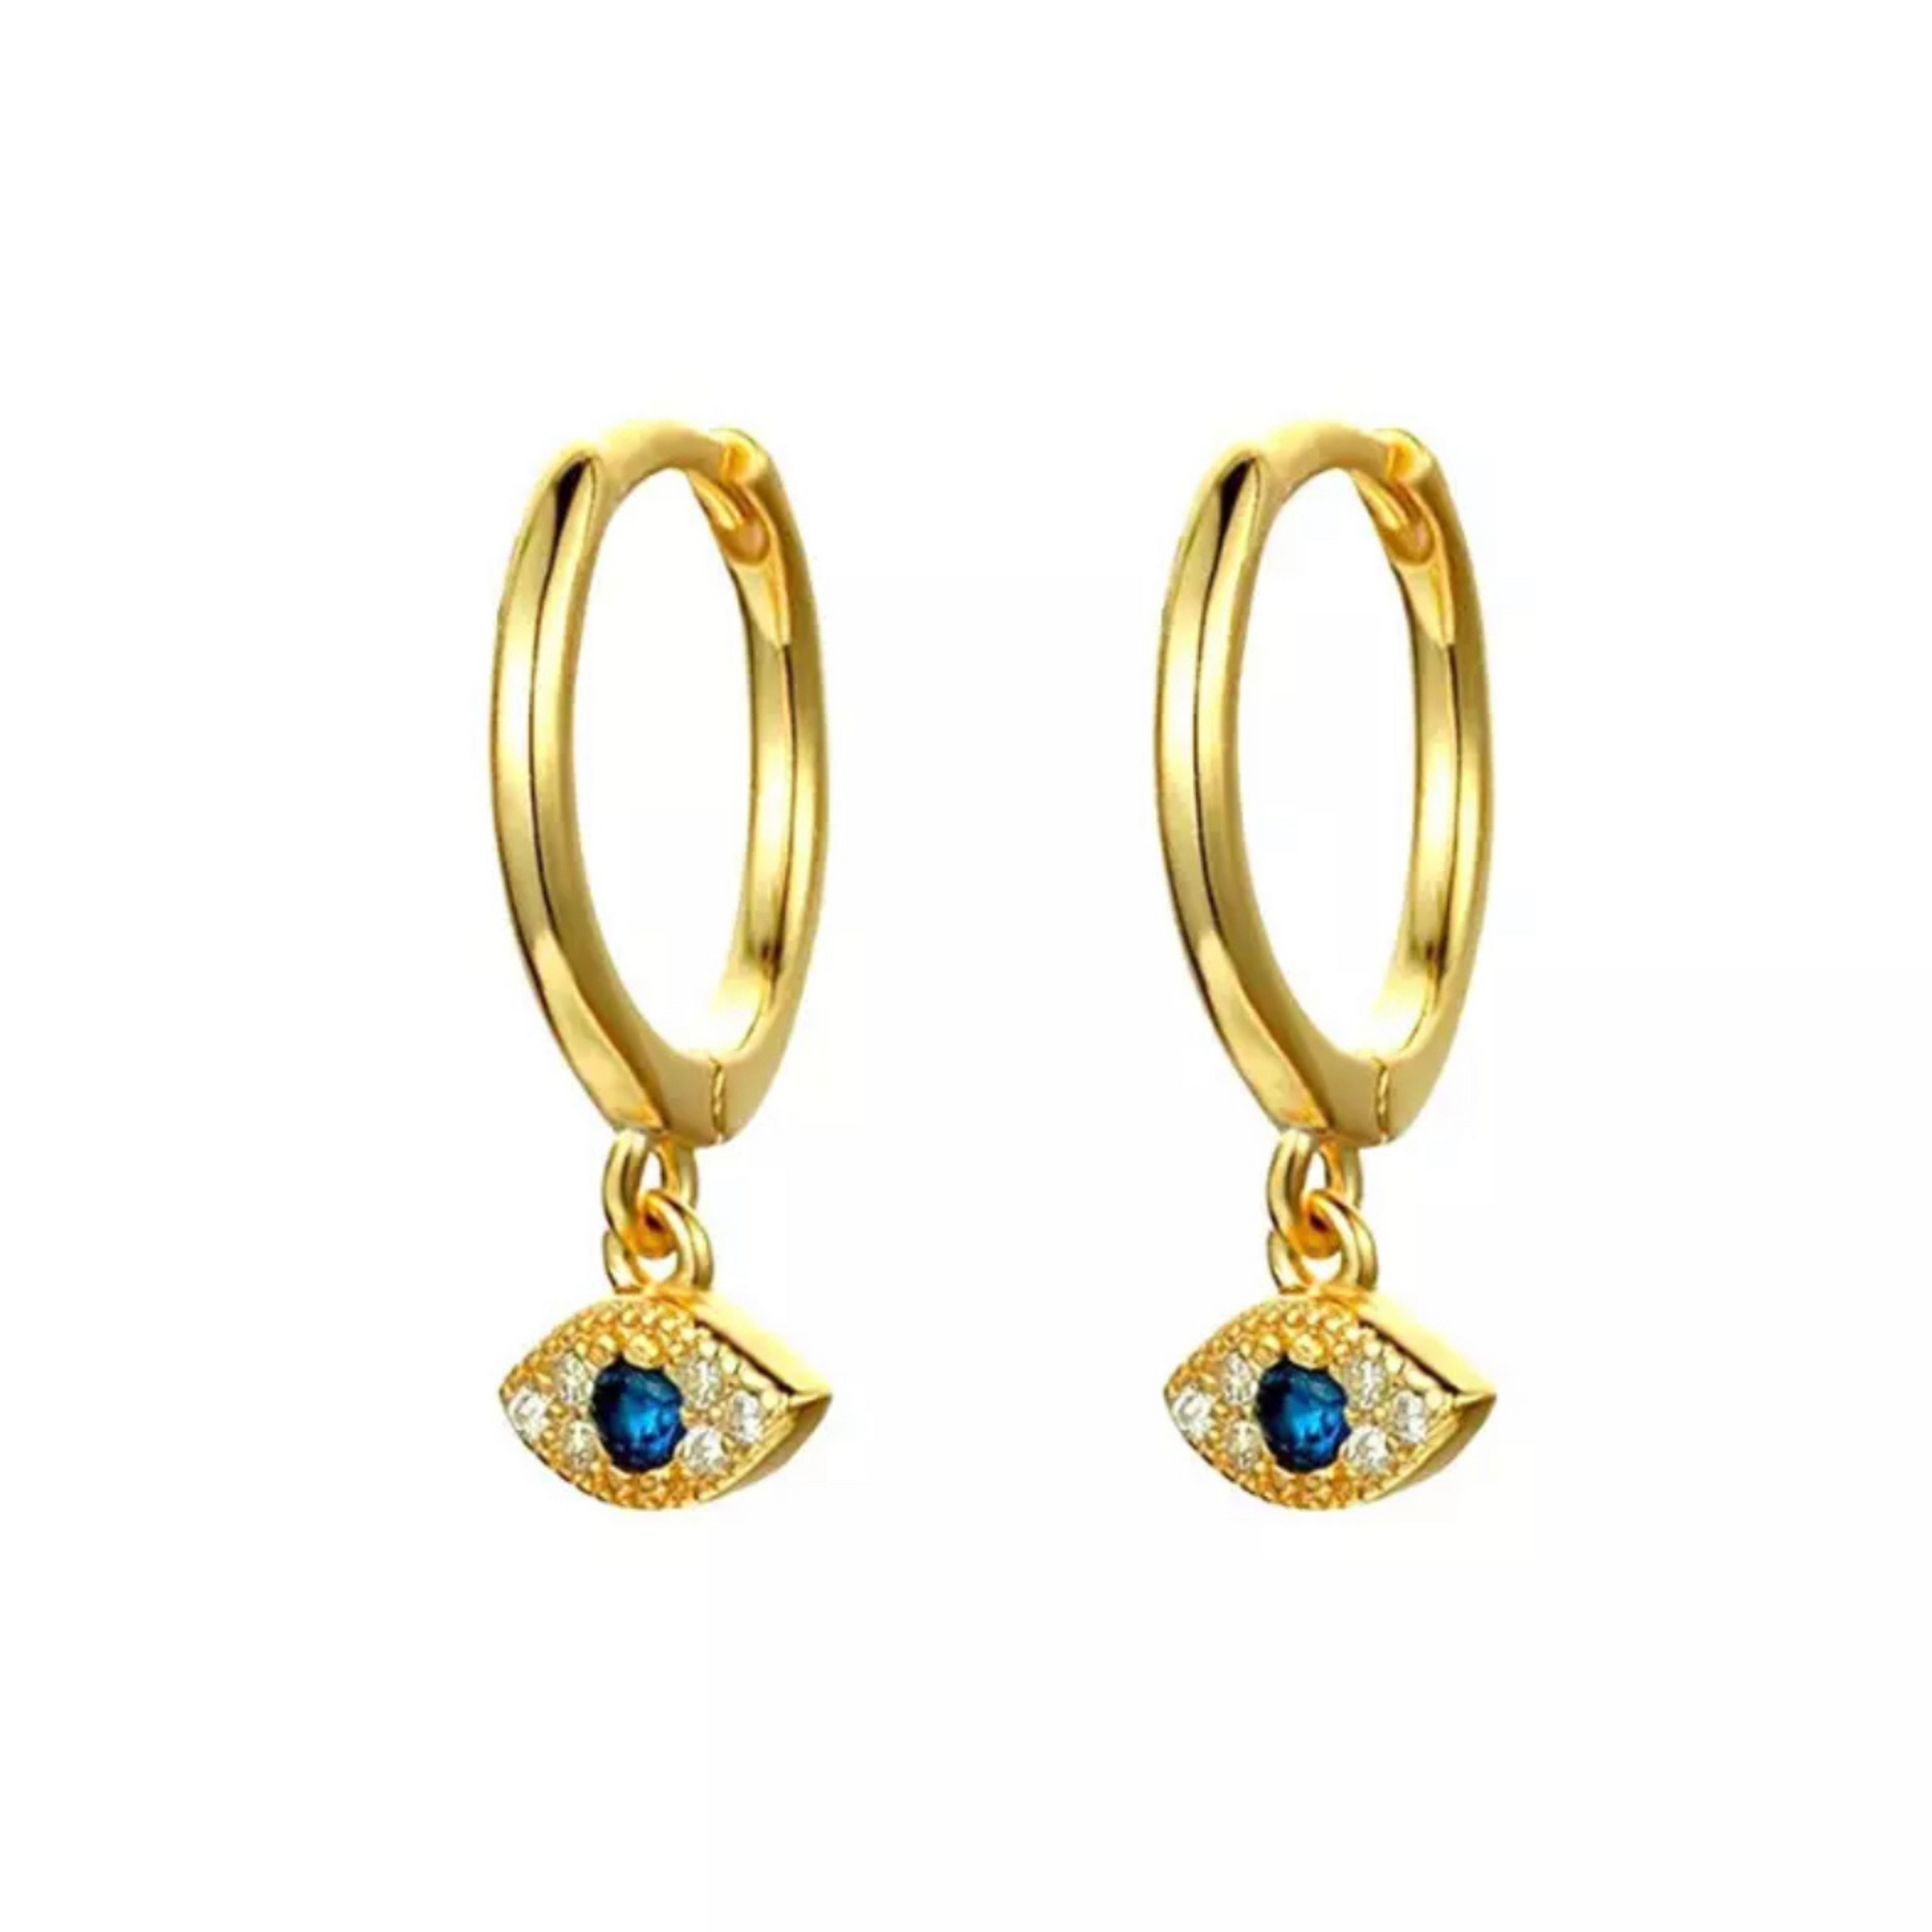 Nazar øreringe i guld med små flotte zircon sten og en blå sten som øje.  Materiale: S925 sterling sølv, guldbelagt med 14 karat, zircon sten, kliklås